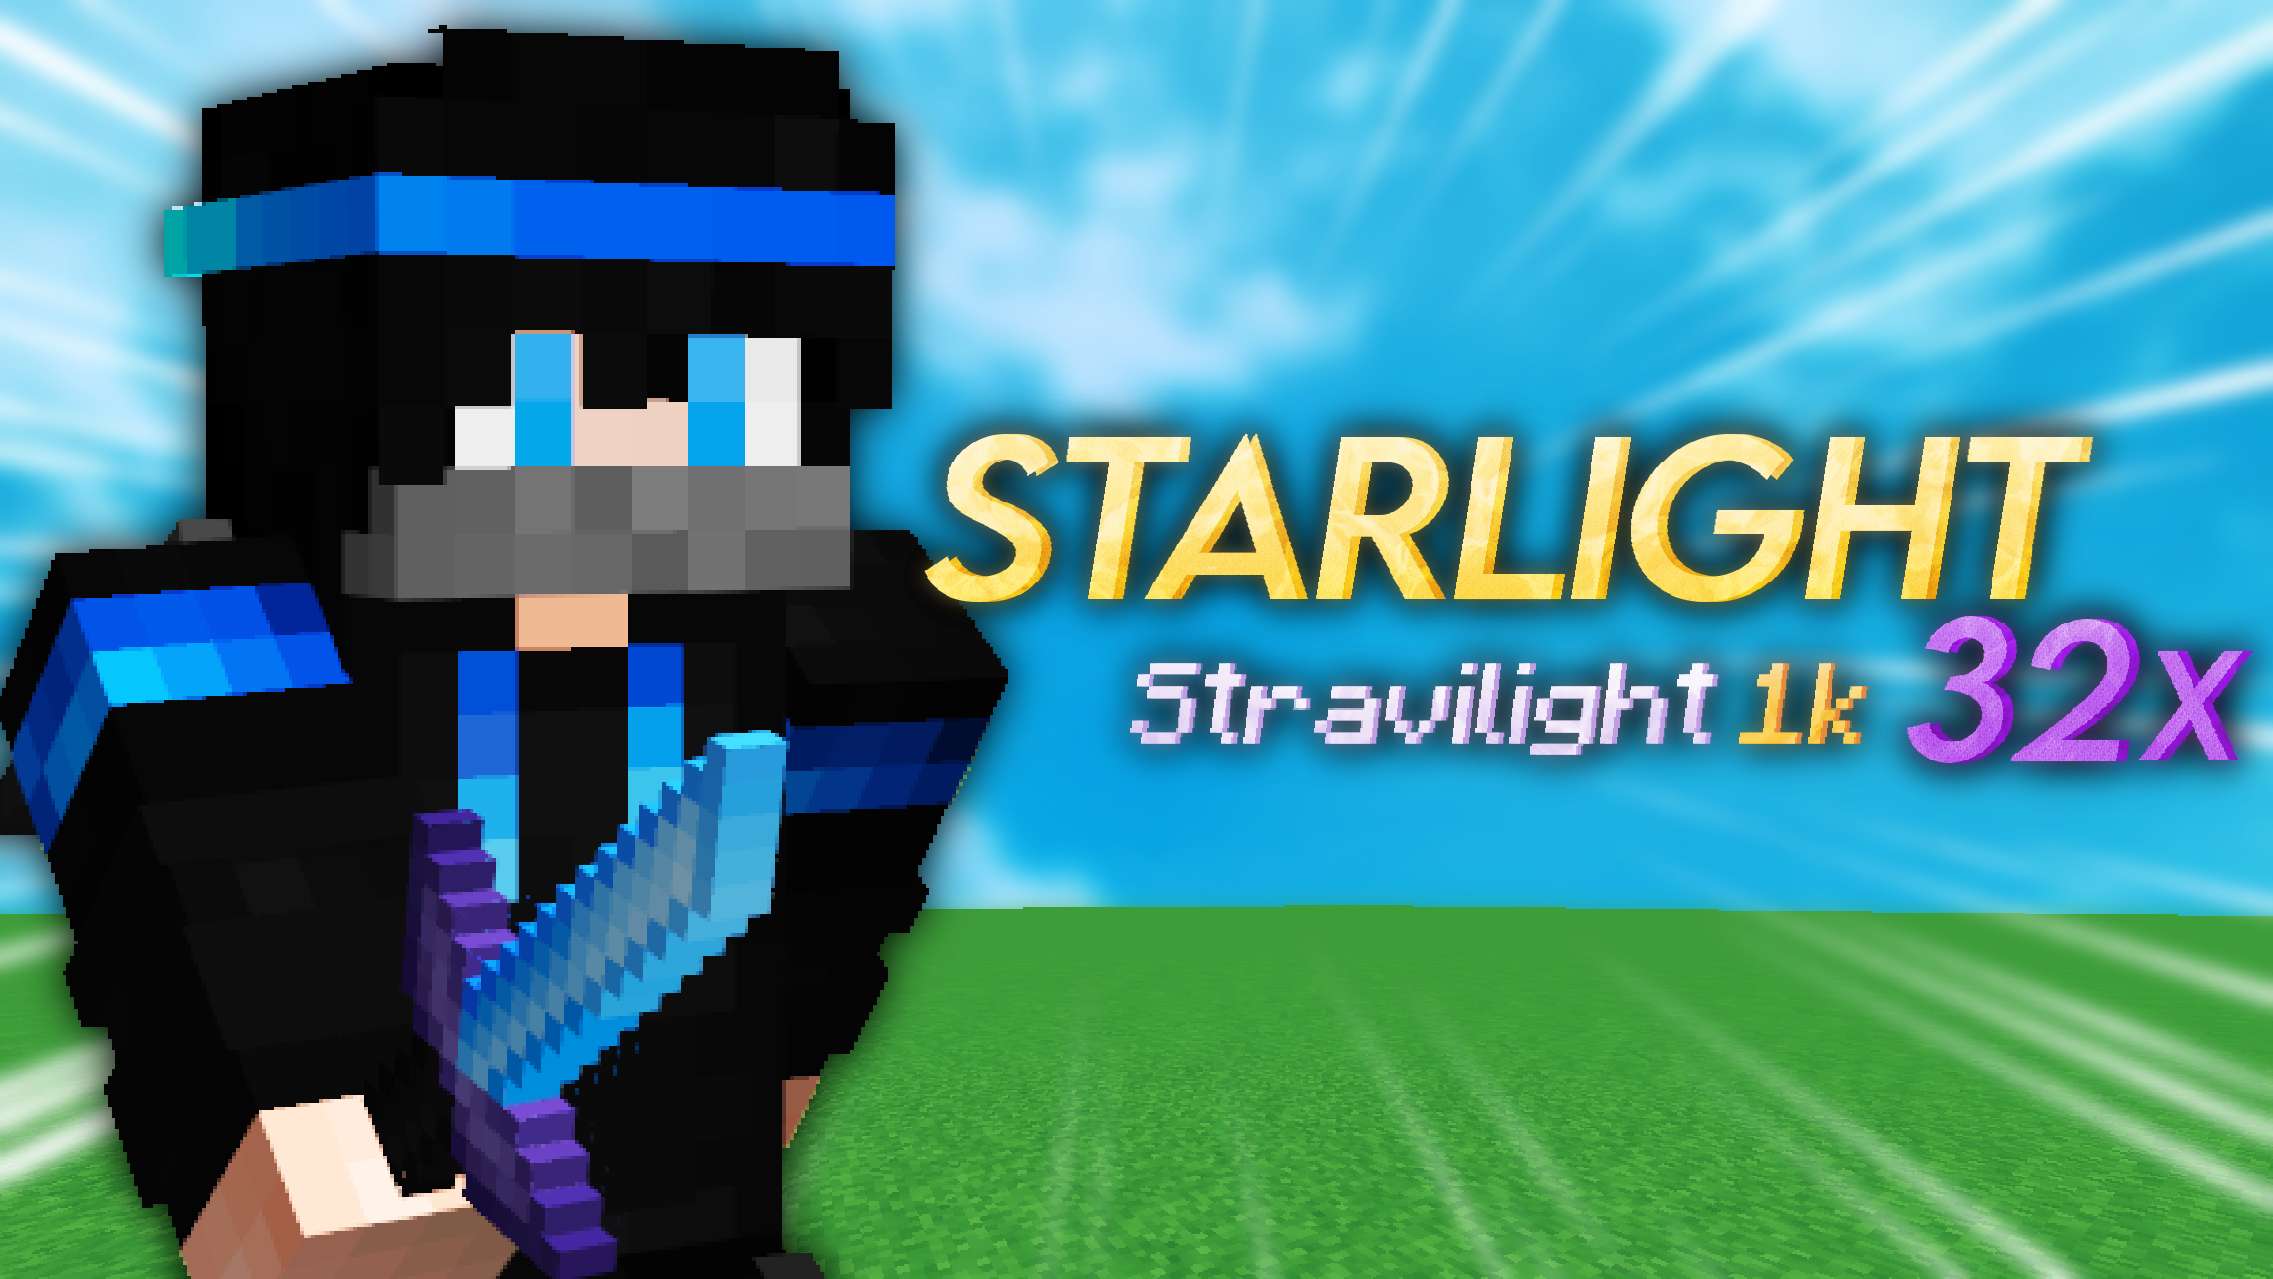 Starlight - (Stravilight 1k) 32 by Mqryo on PvPRP